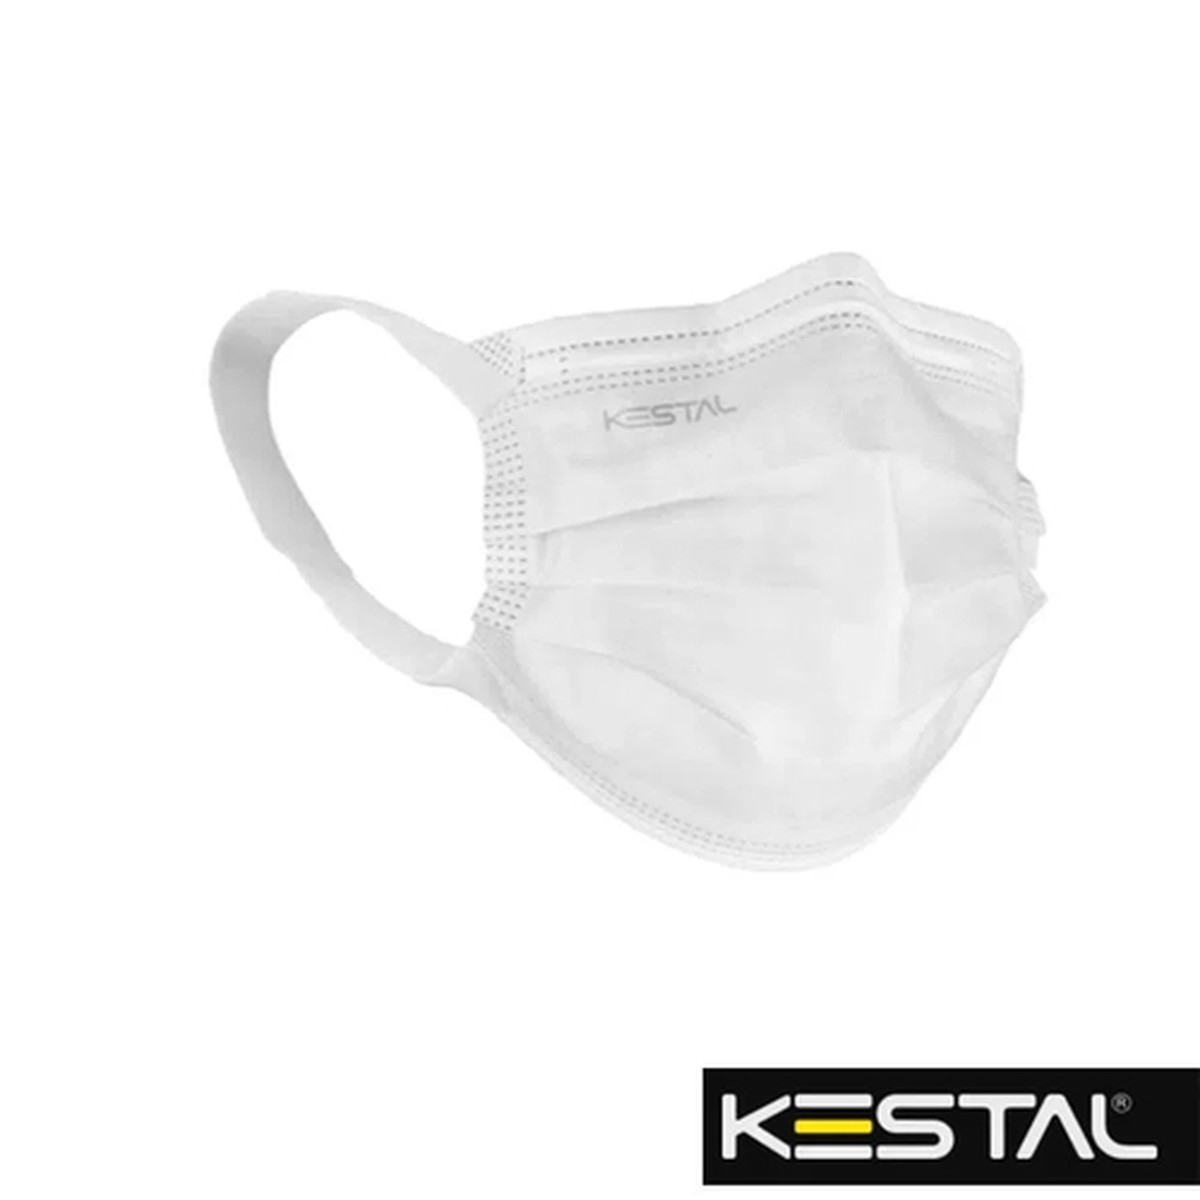 Foto do produto Mascara Cirúrgica Tripla Tech3 FLAT CX/50 Unid. - Kestal 